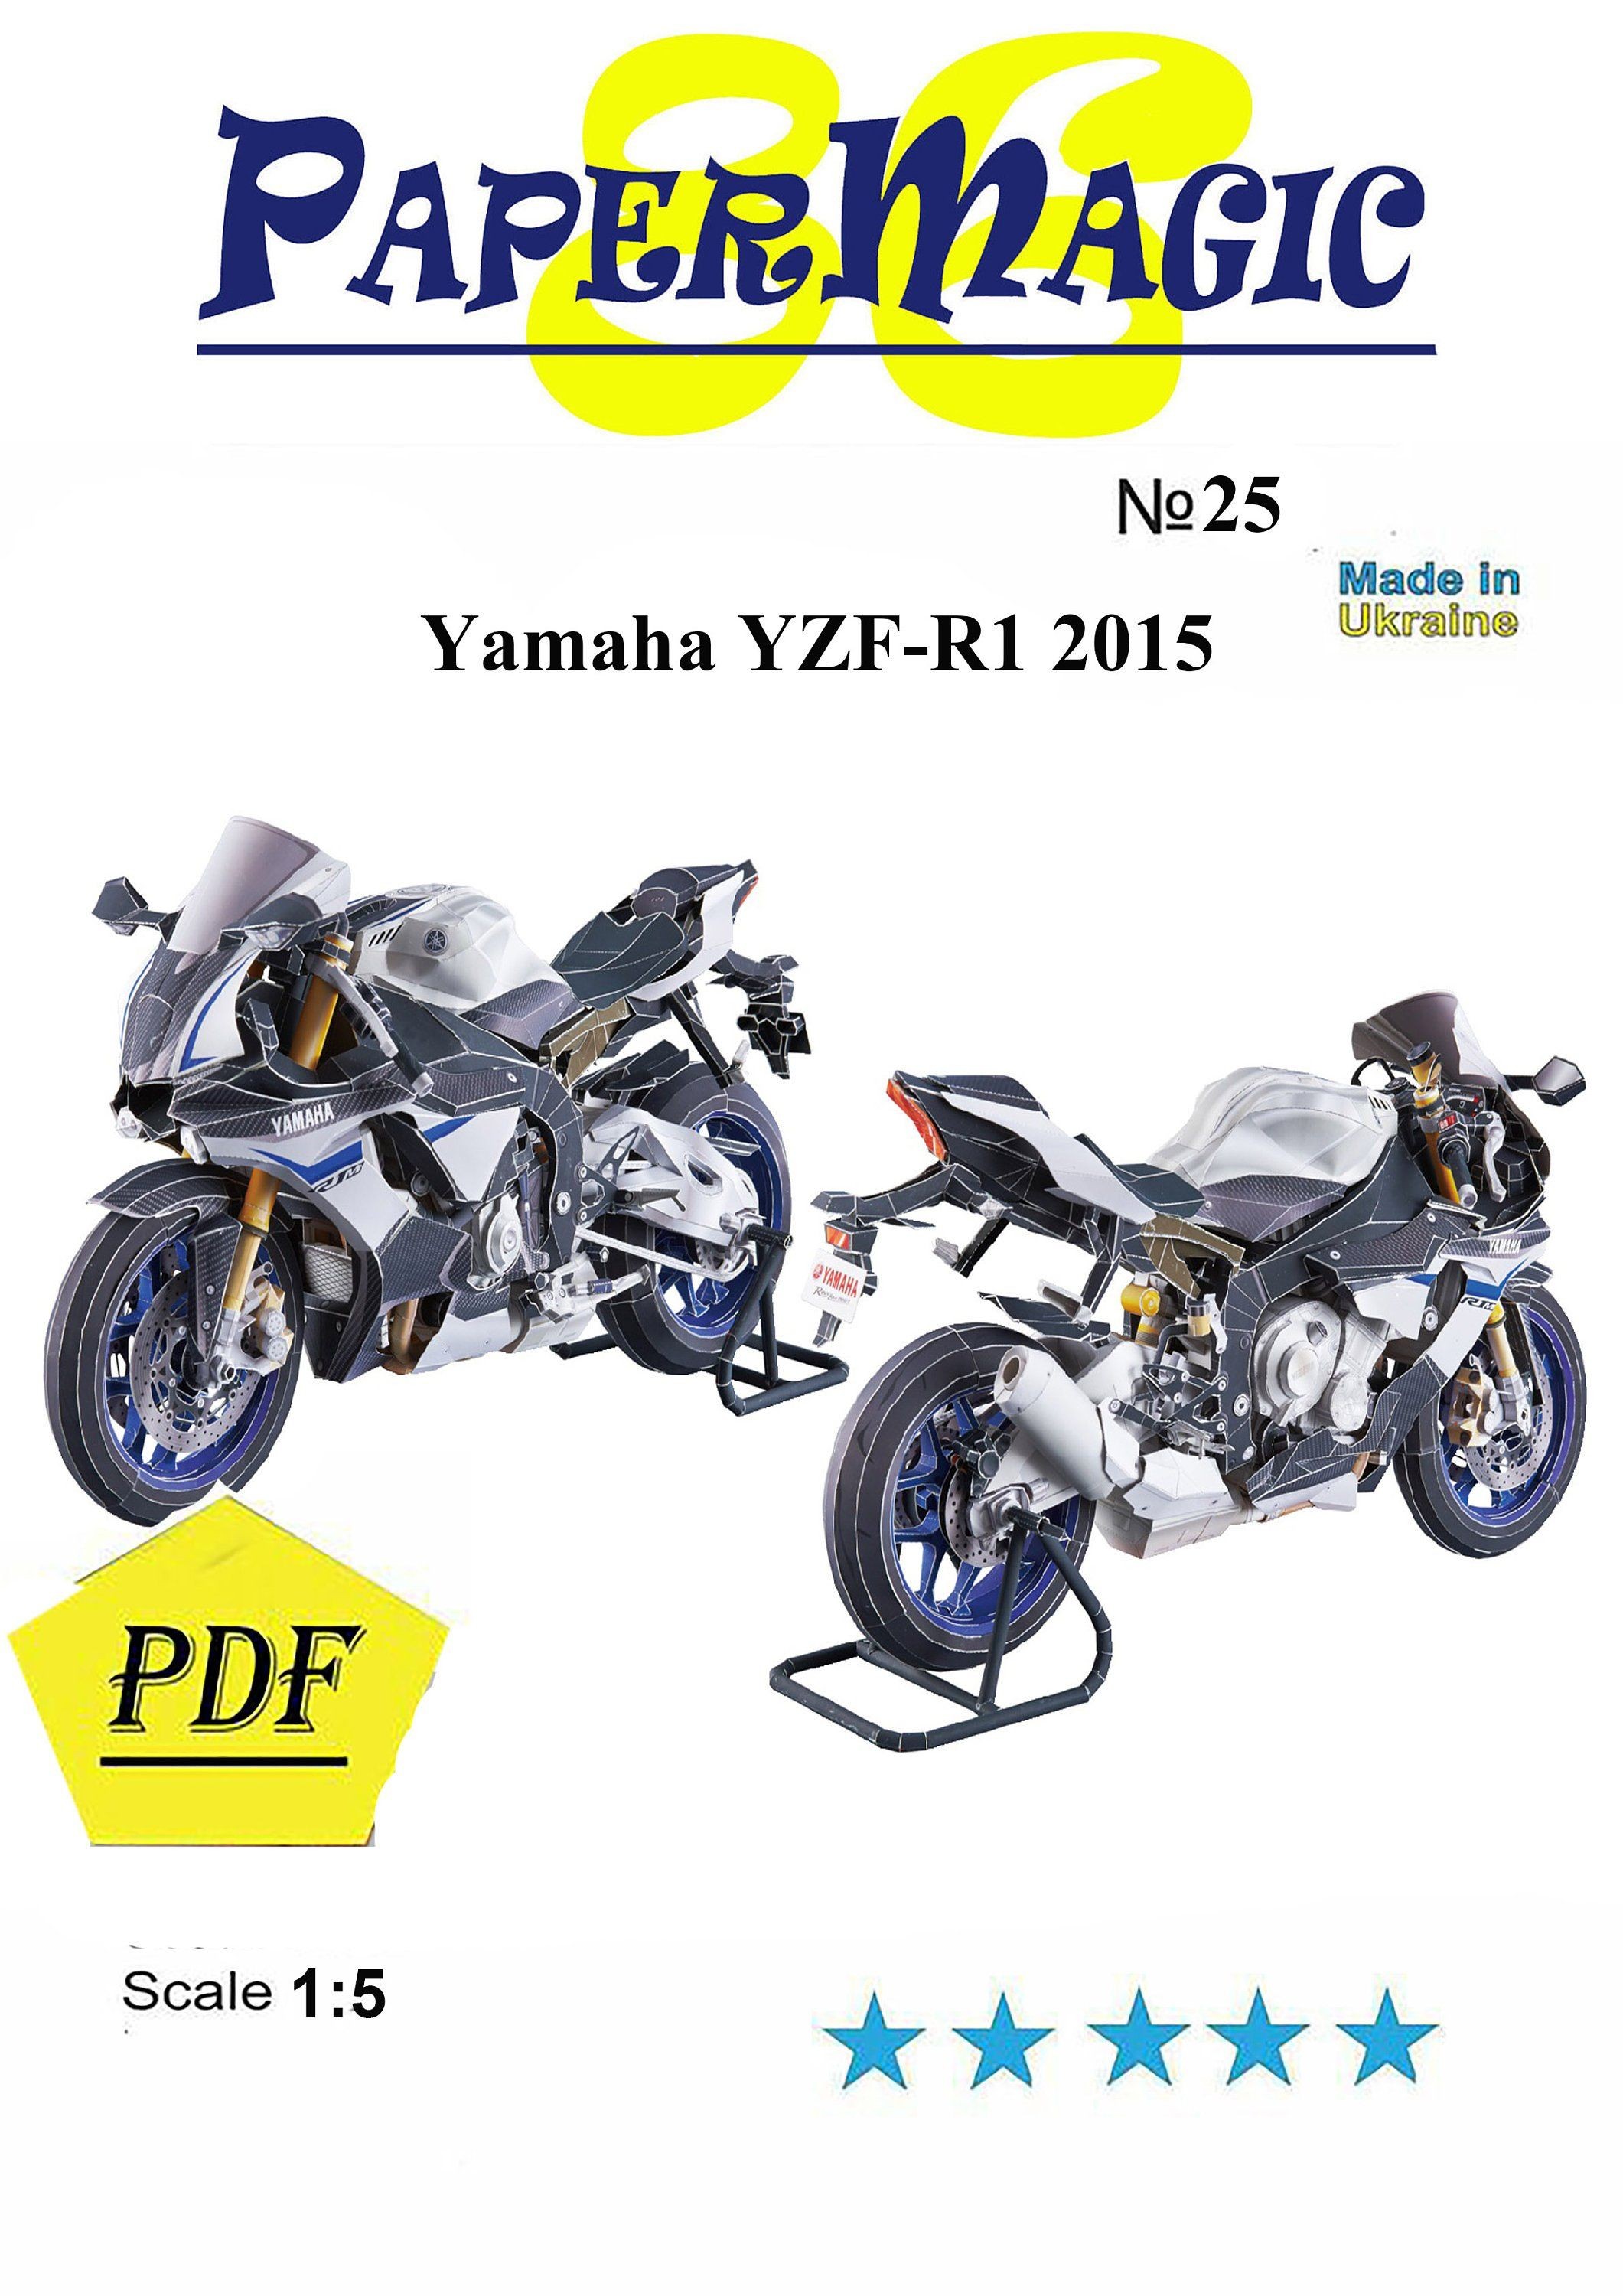 Papercraft Motorcycle Paper Model Kit Yamaha Yzf R1 2015 Papercraft 3d Paper Craft Model